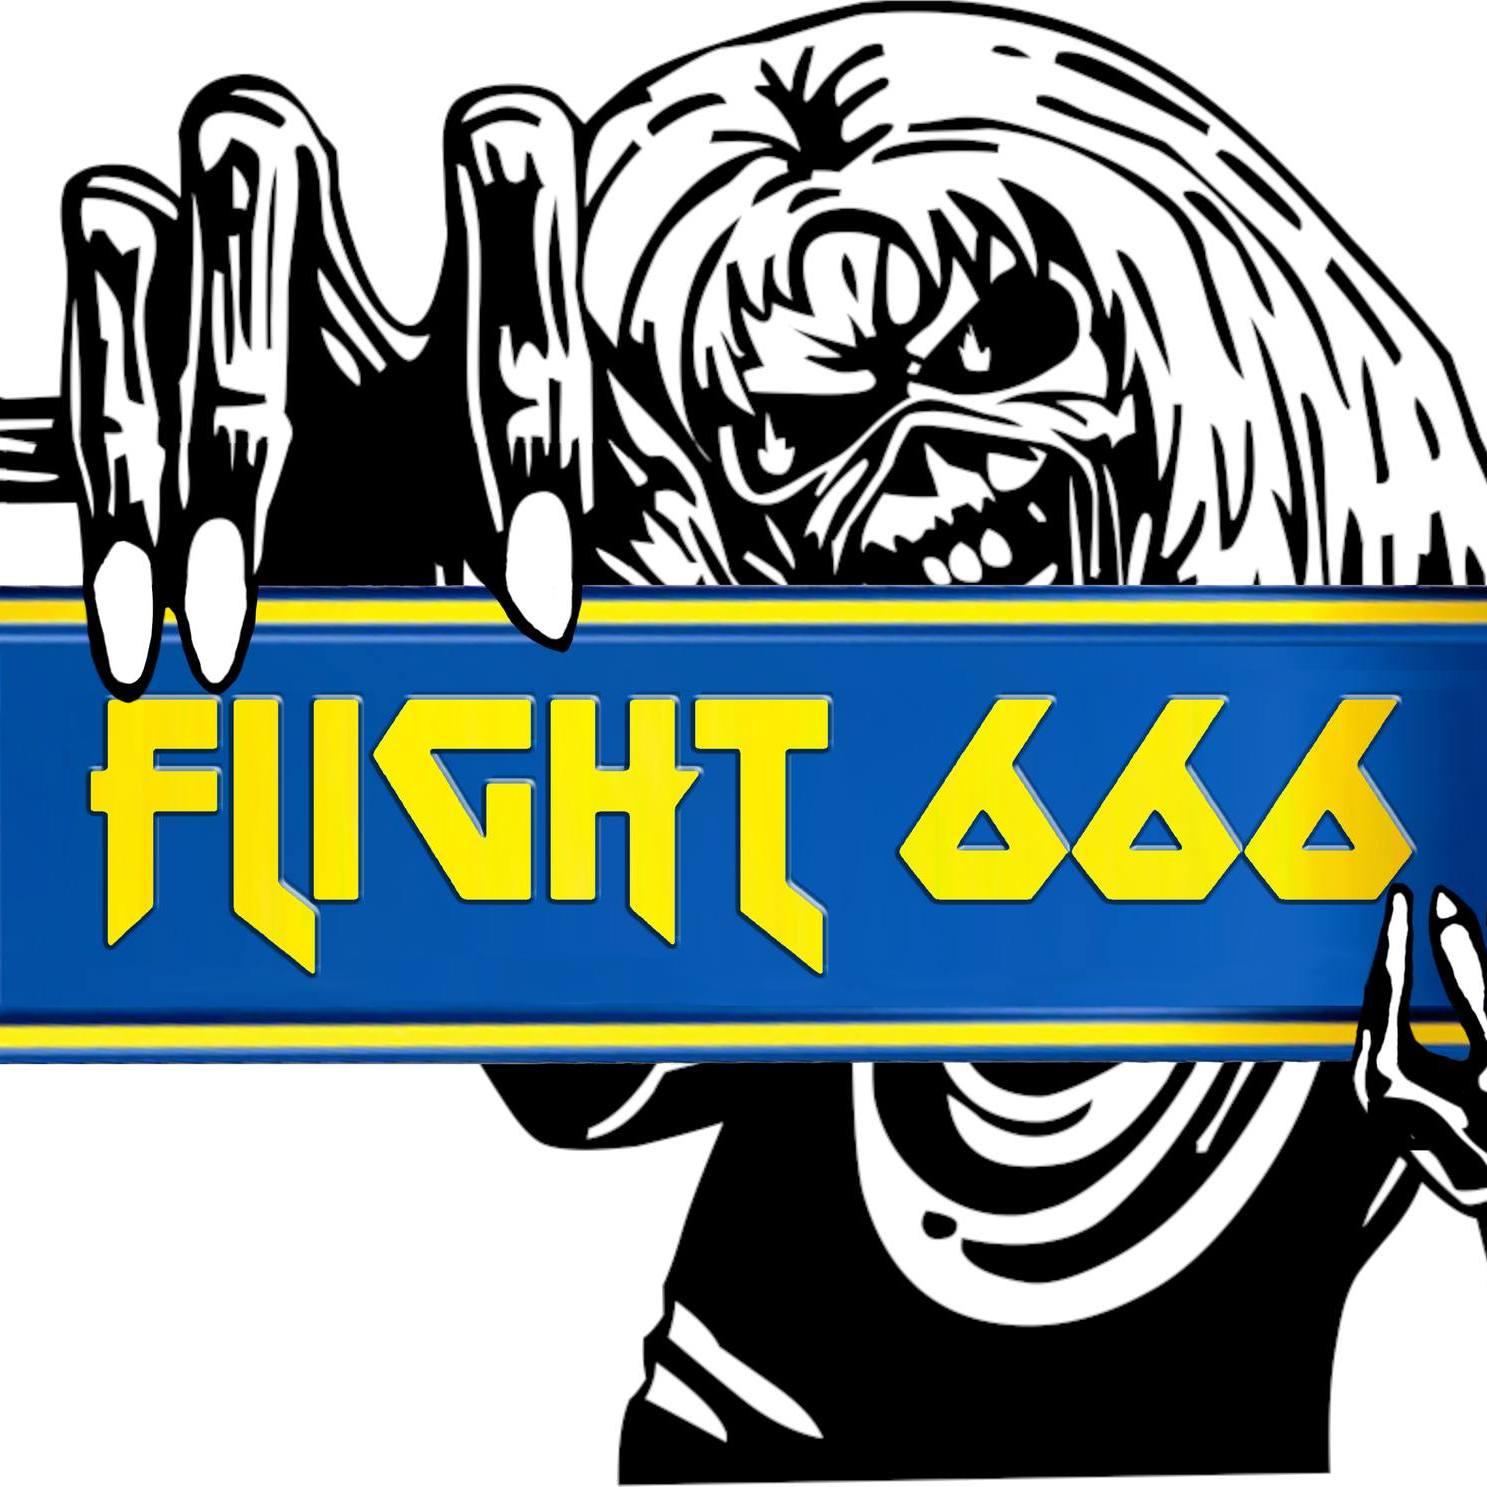 storage/website/logo-flight-666.jpg